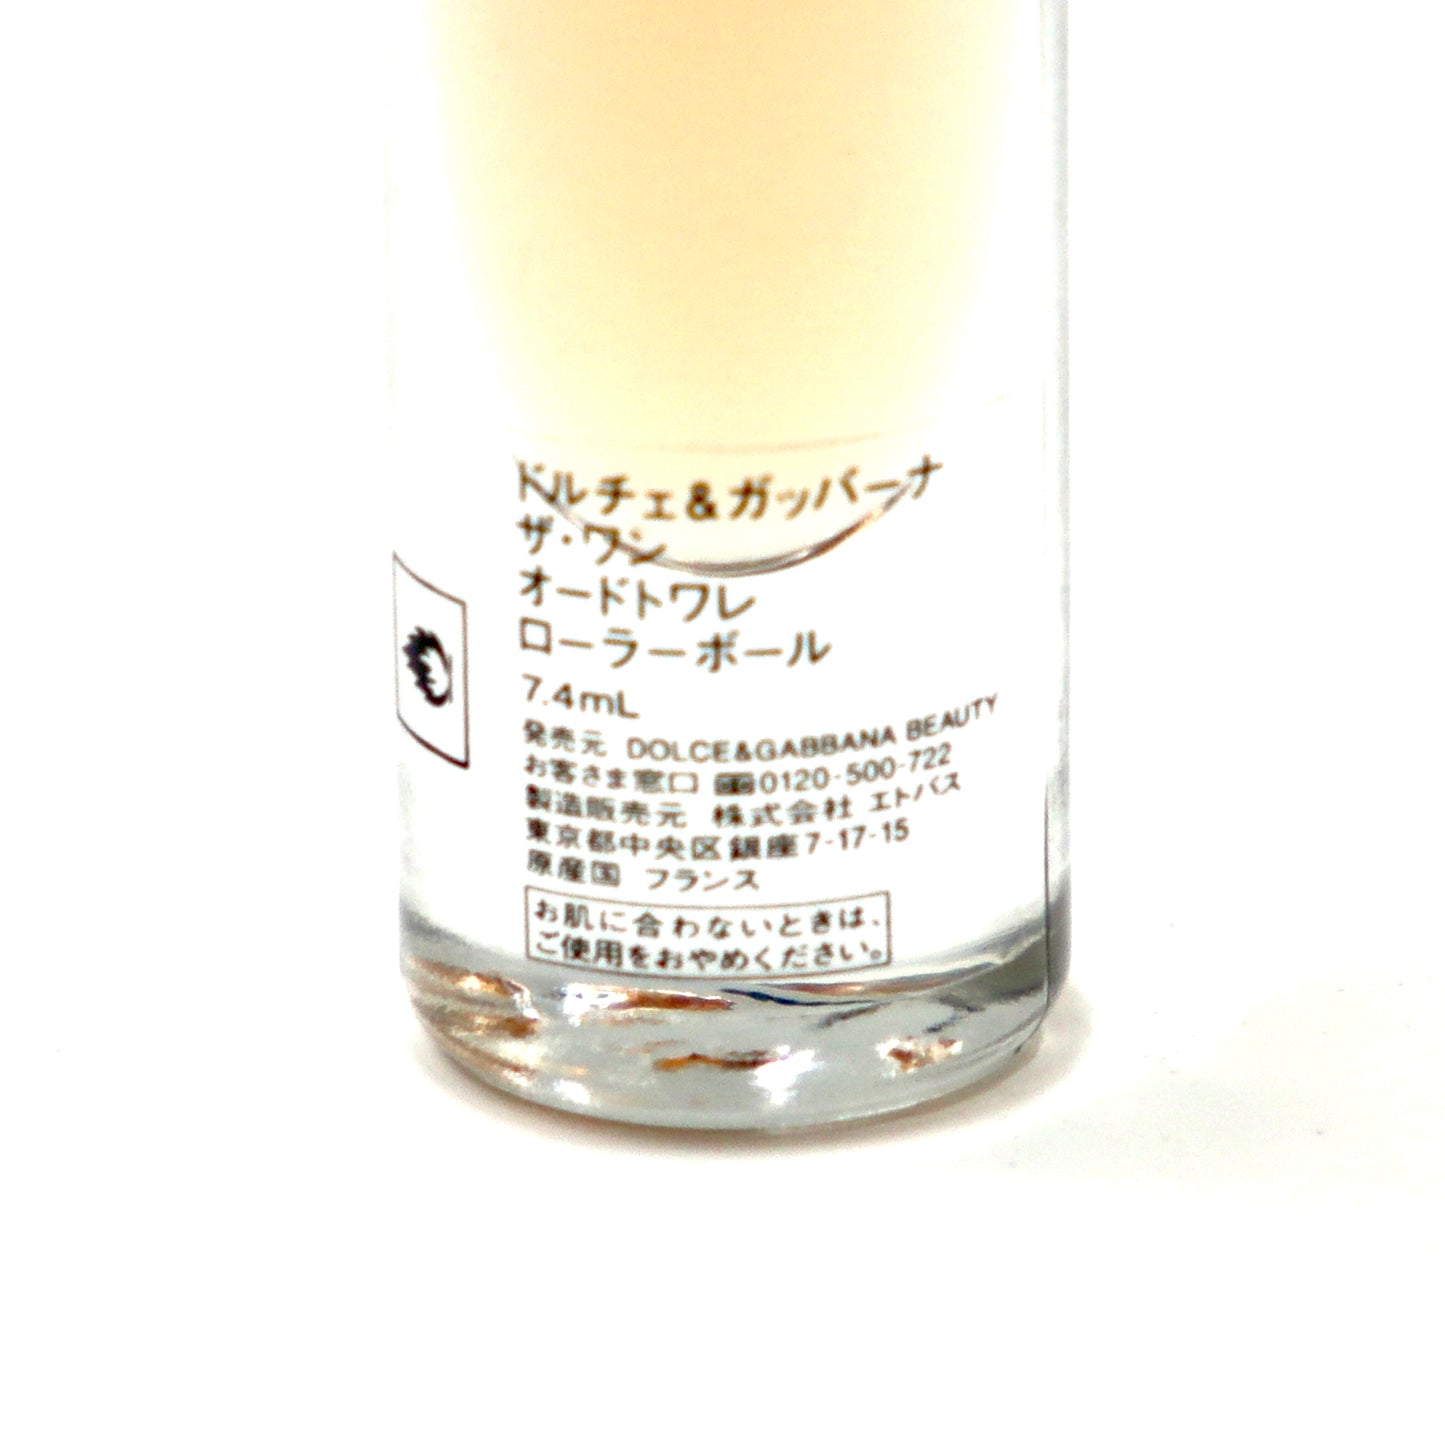 DOLCE & GABBANA 香水 7.4ml ザ・ワン オードトワレ ローラーボール フランス製